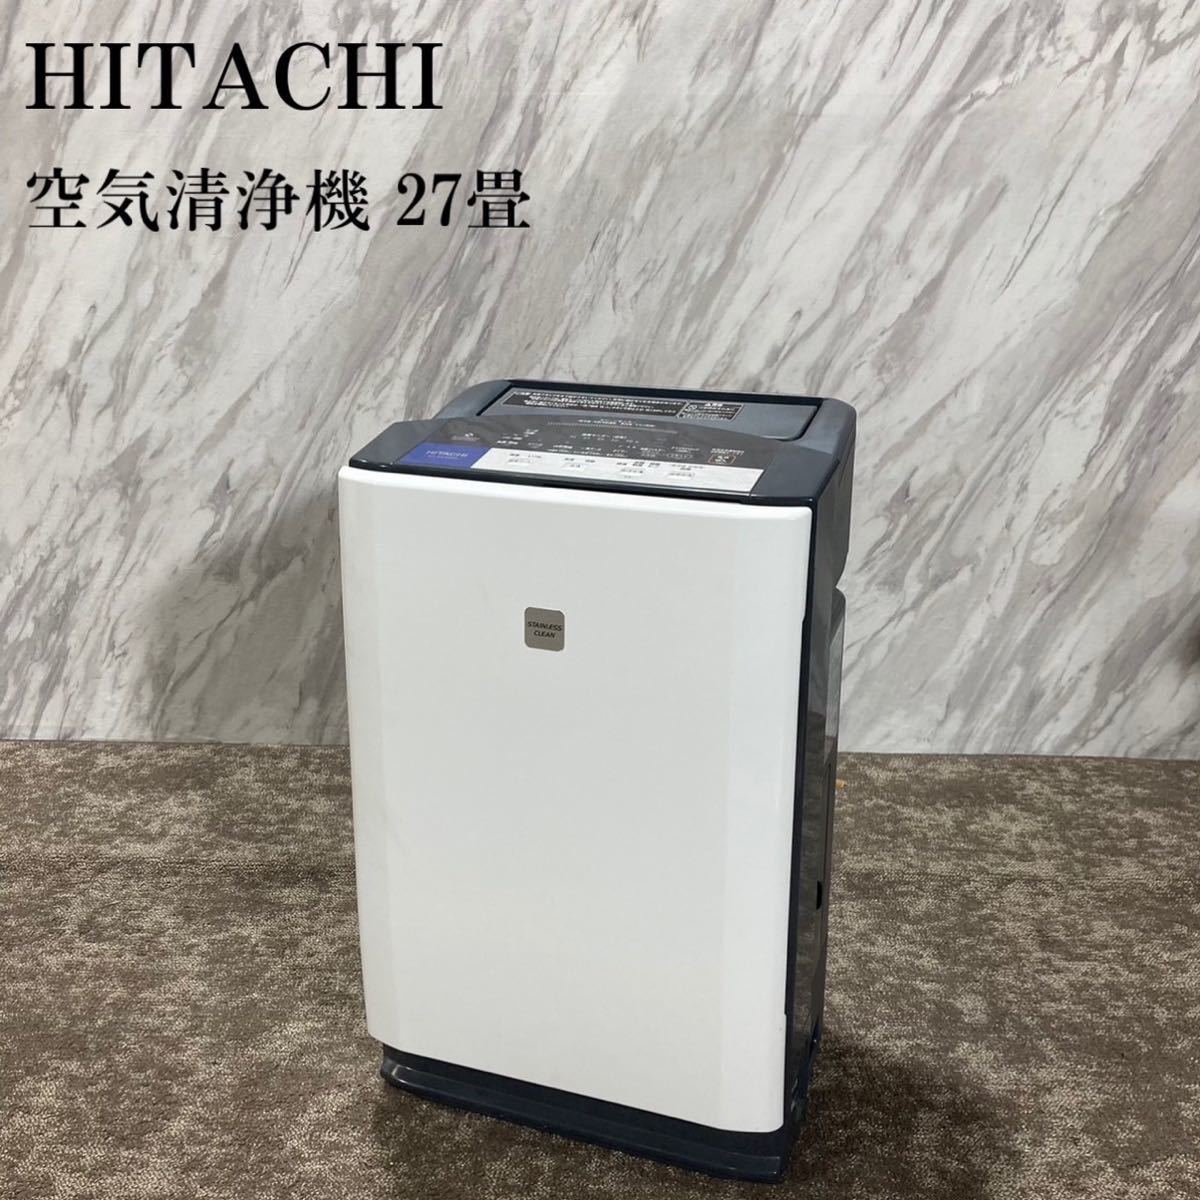 週間売れ筋 HITACHI I342 除湿 加湿 27畳 (W) EP-KV1000 空気清浄機